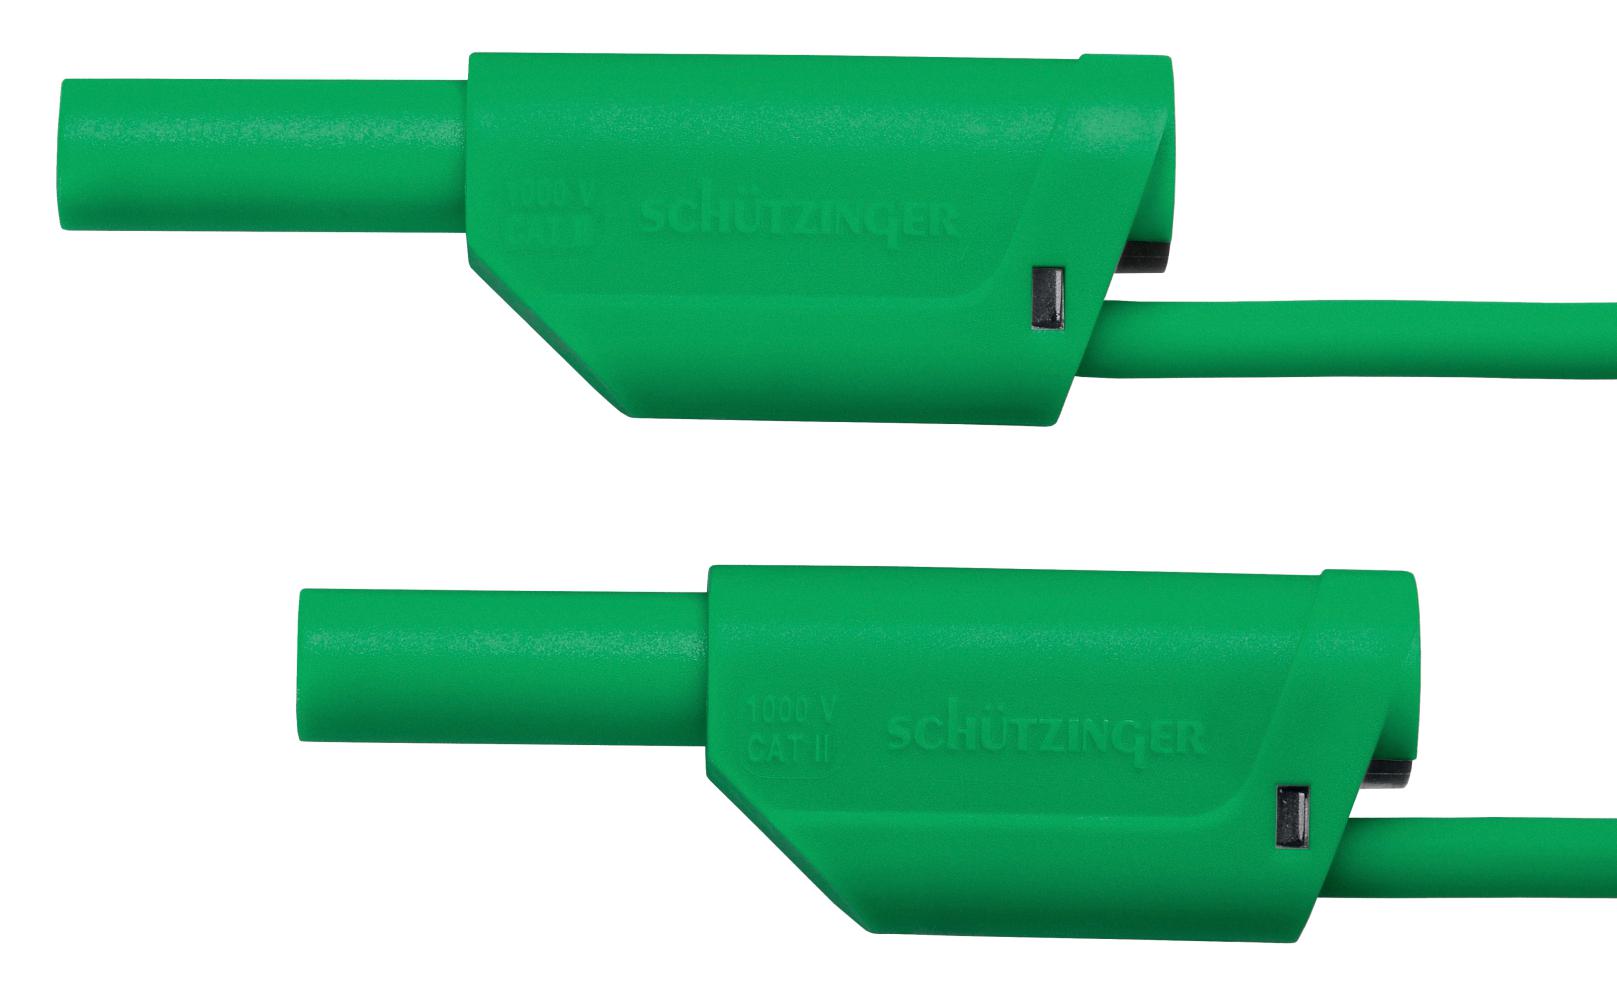 Schutzinger Vsfk 6000 / 2.5 / 50 / Gn Test Lead, Stackable Banana Plug, 500mm